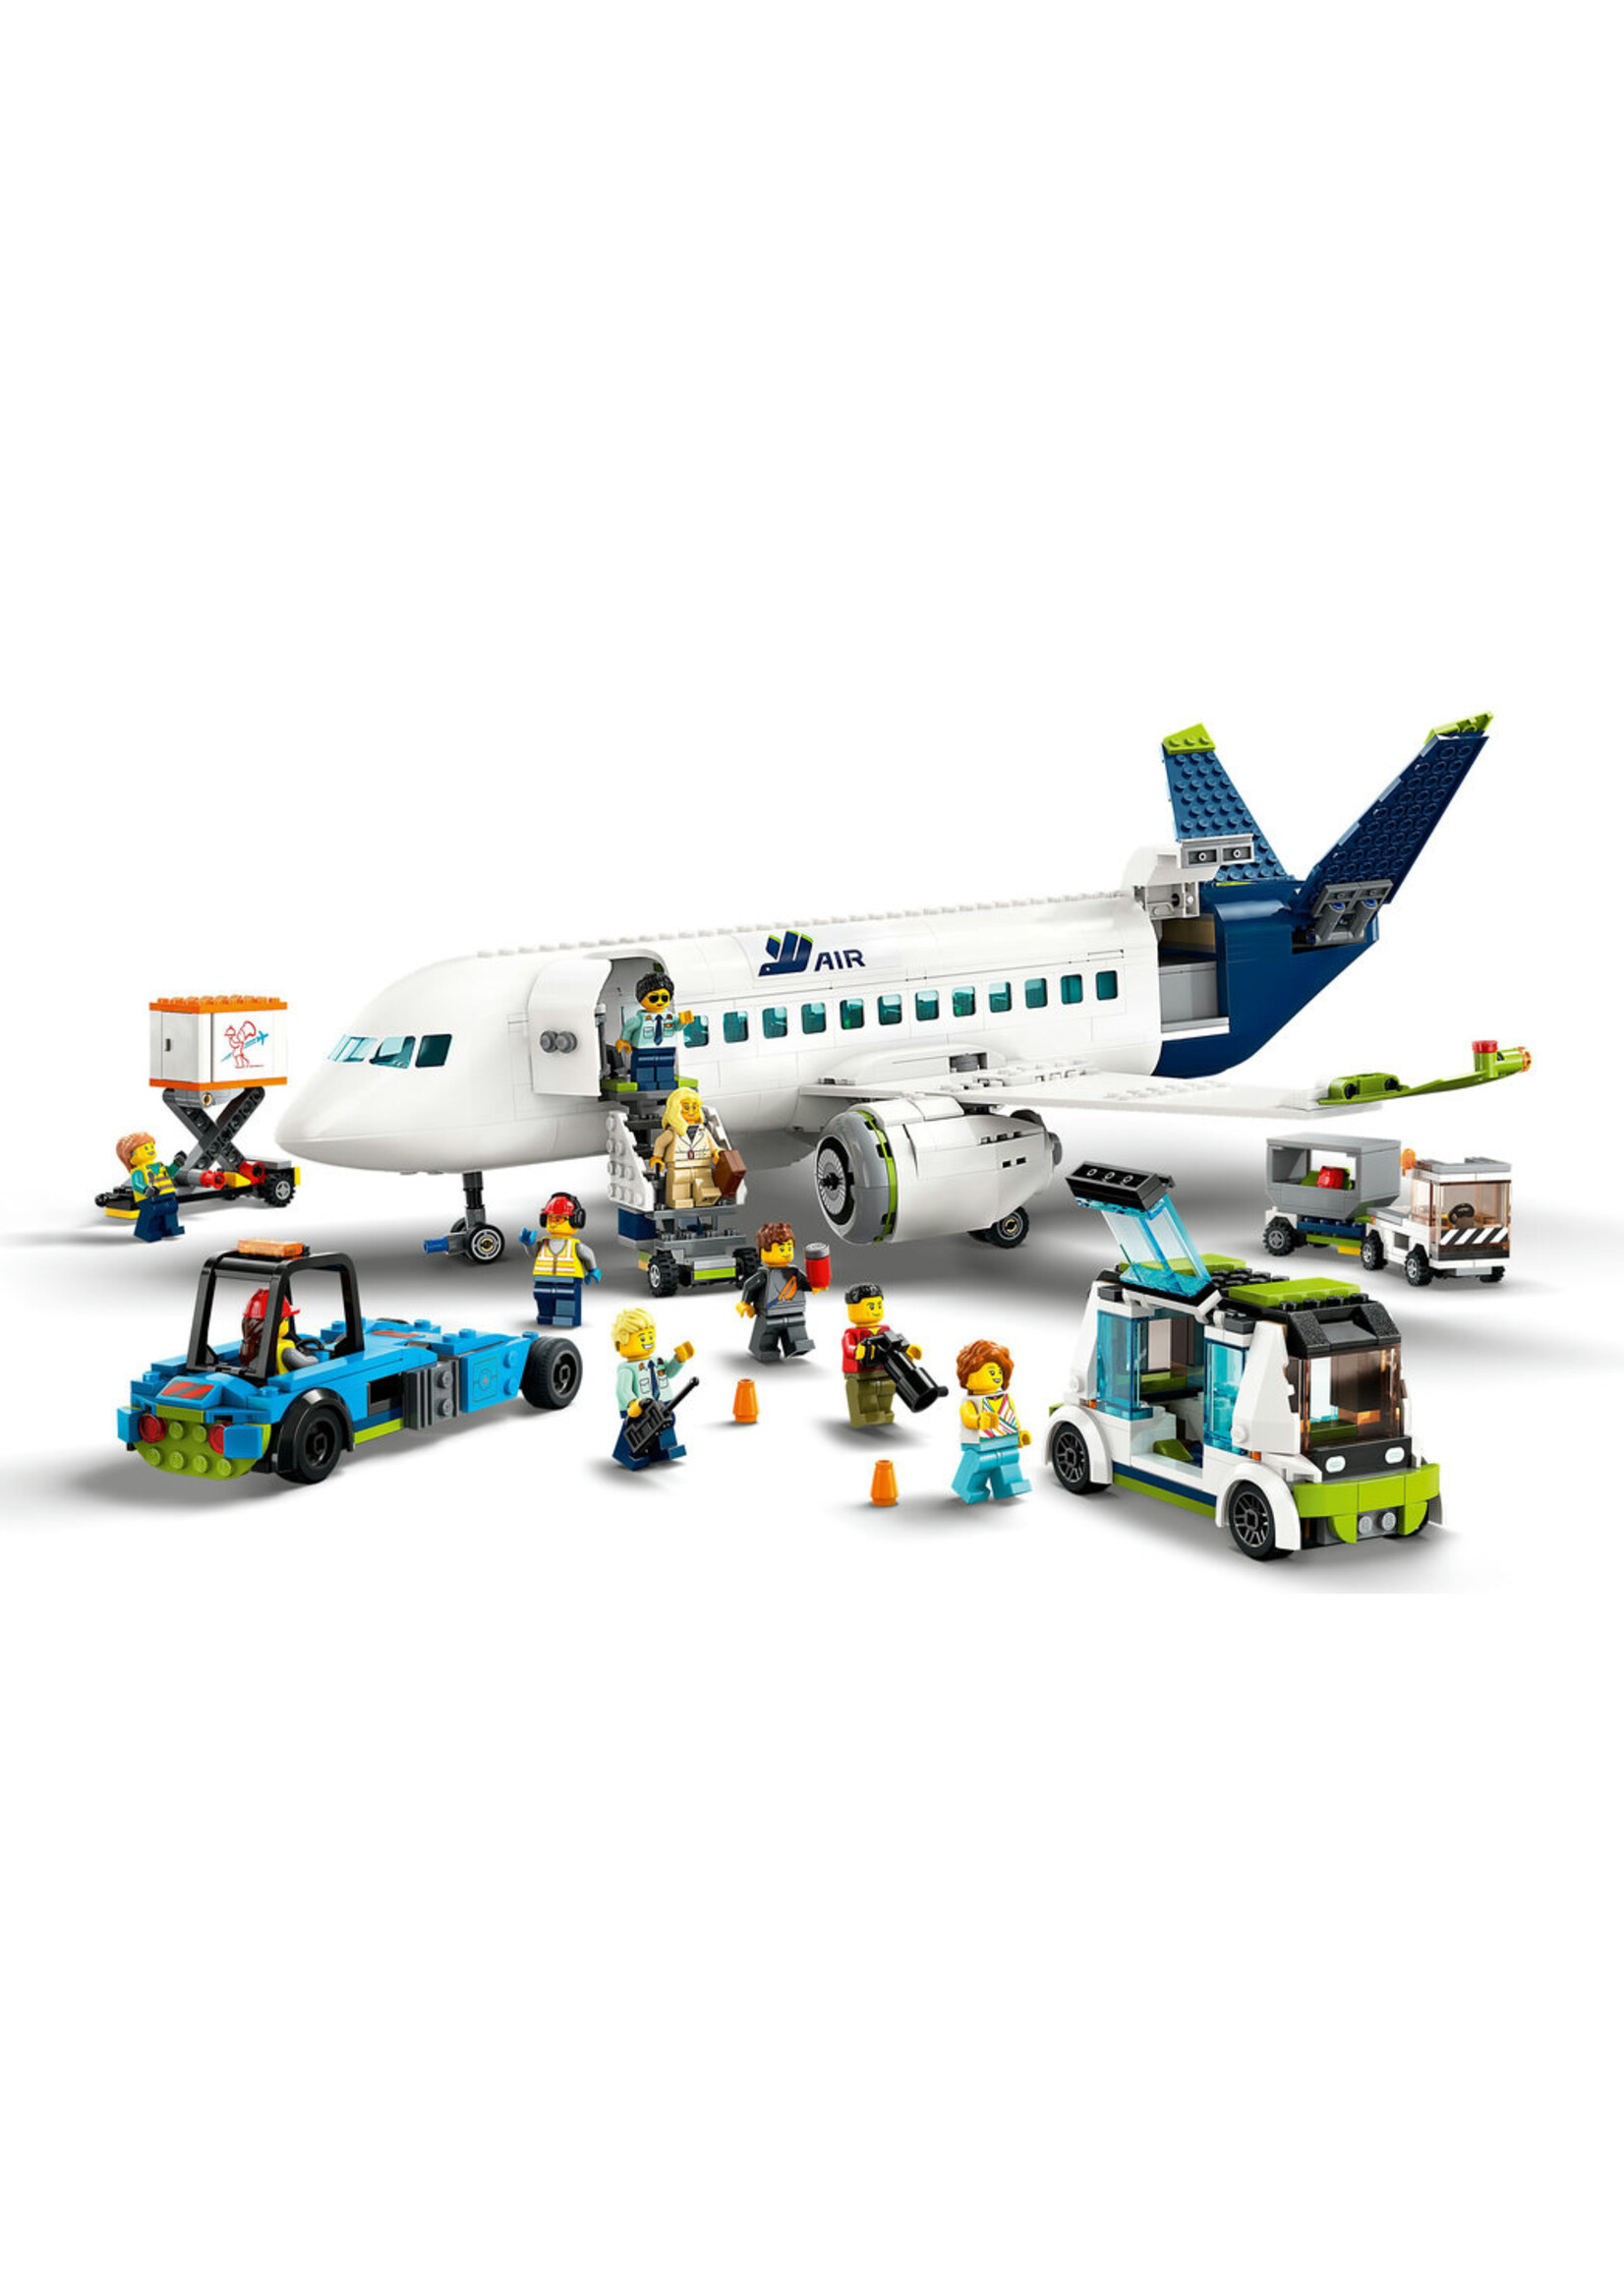 LEGO 60367 - Passenger Airplane